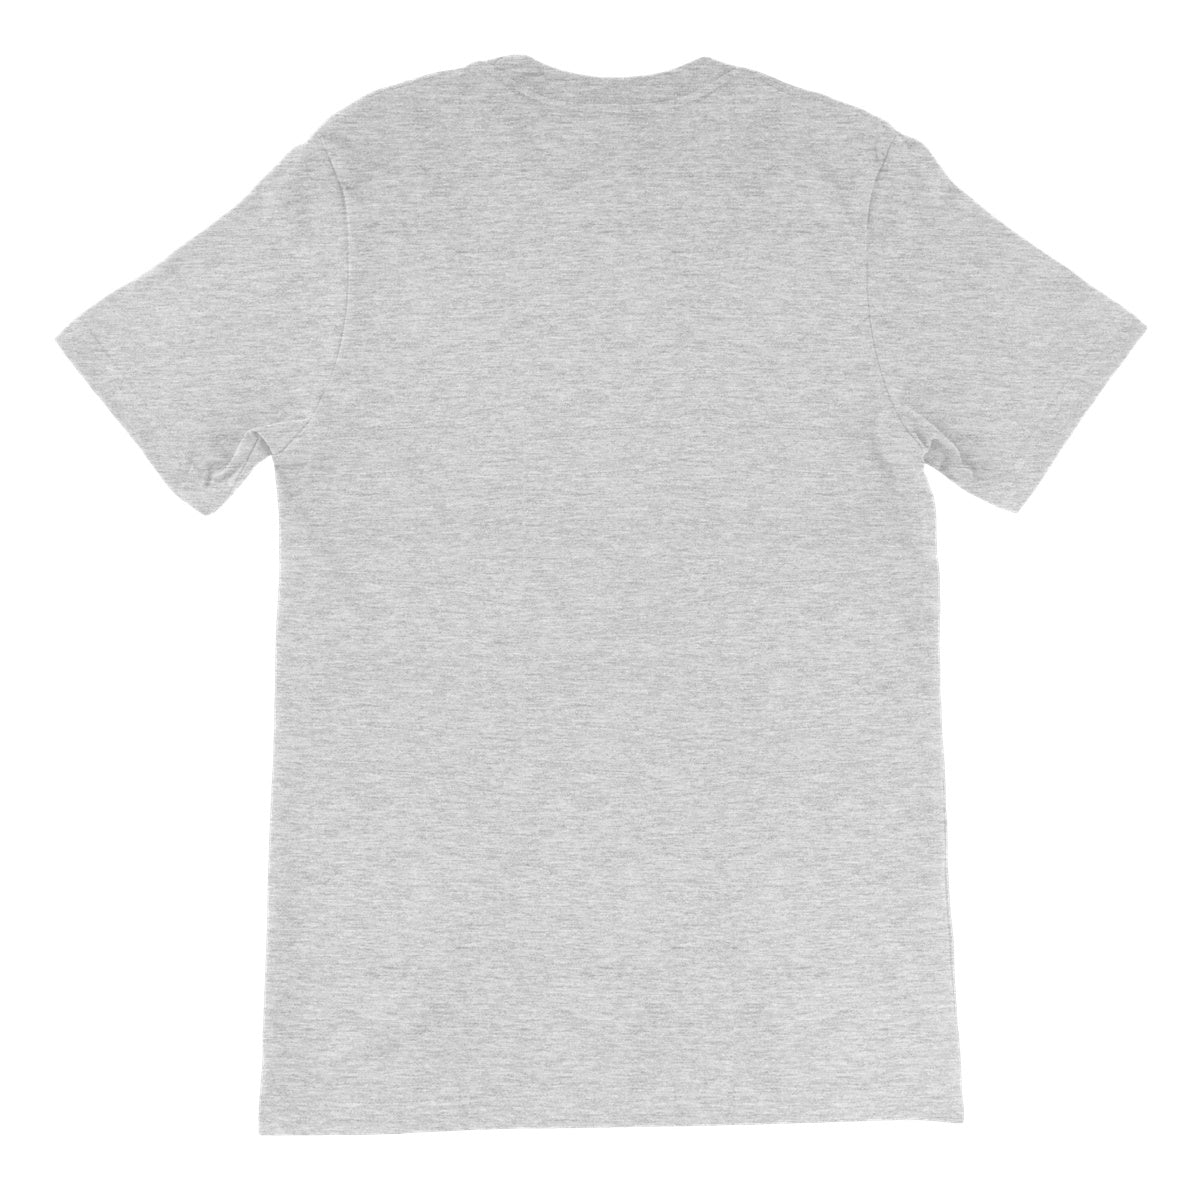 Men's Bavarian Graphic T-Shirt "Grantler" black & white print - 13 colours - Bavari Shop - Bavarian Outfits, Dirndl, Lederhosen & Accessories